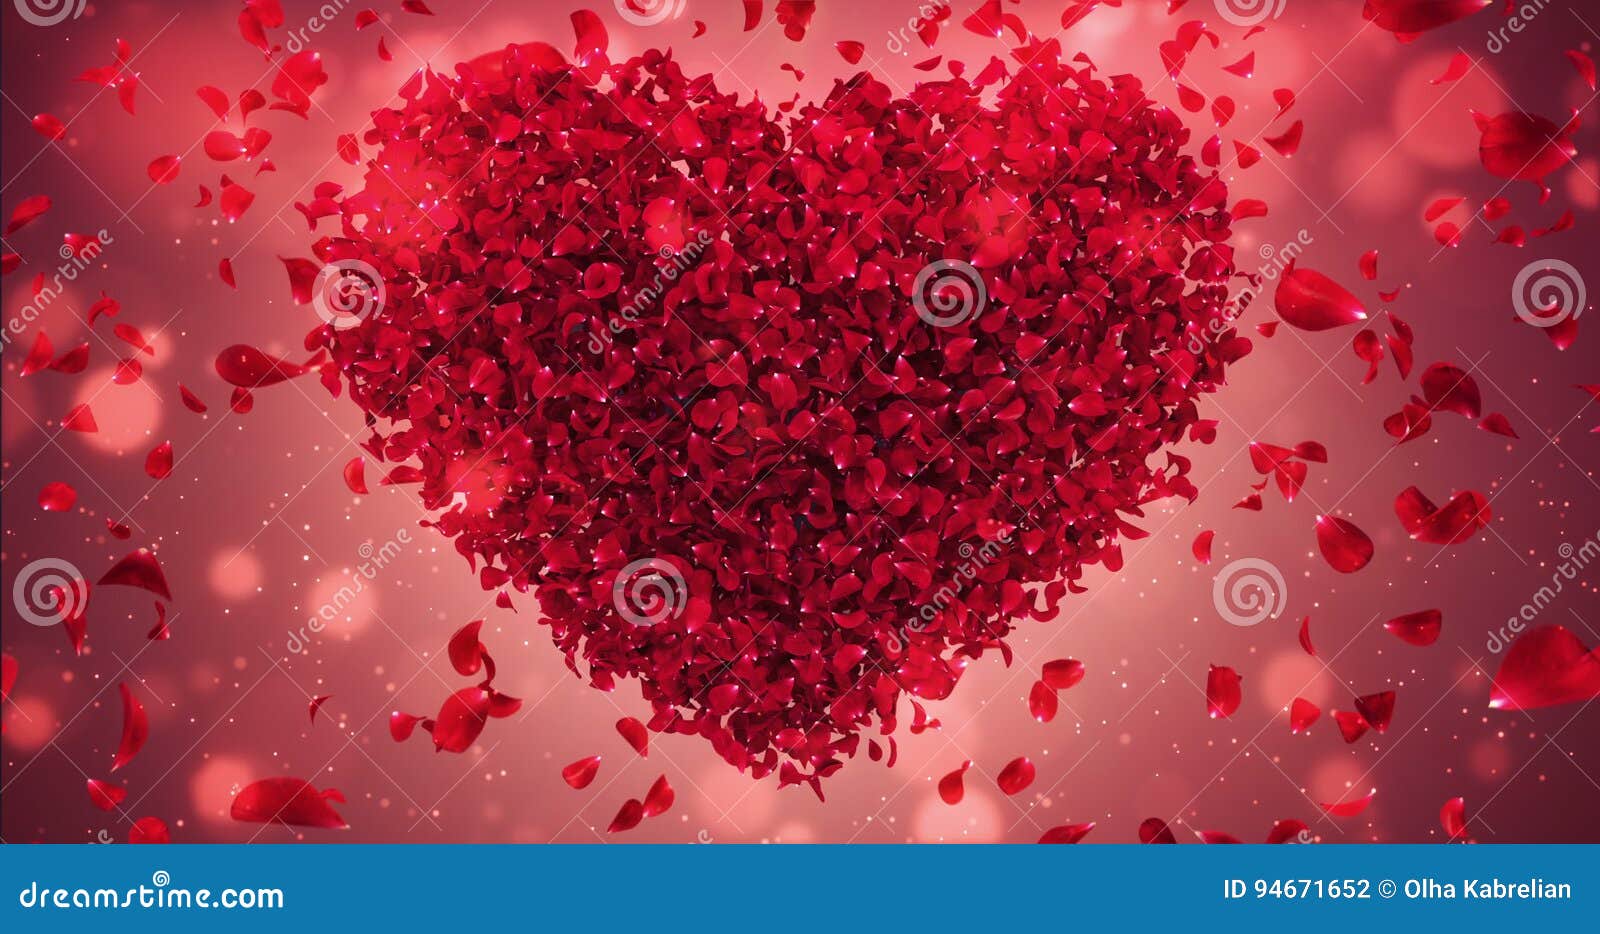 Red Rose Flower Falling Petals Love Heart Valentine Wedding ...